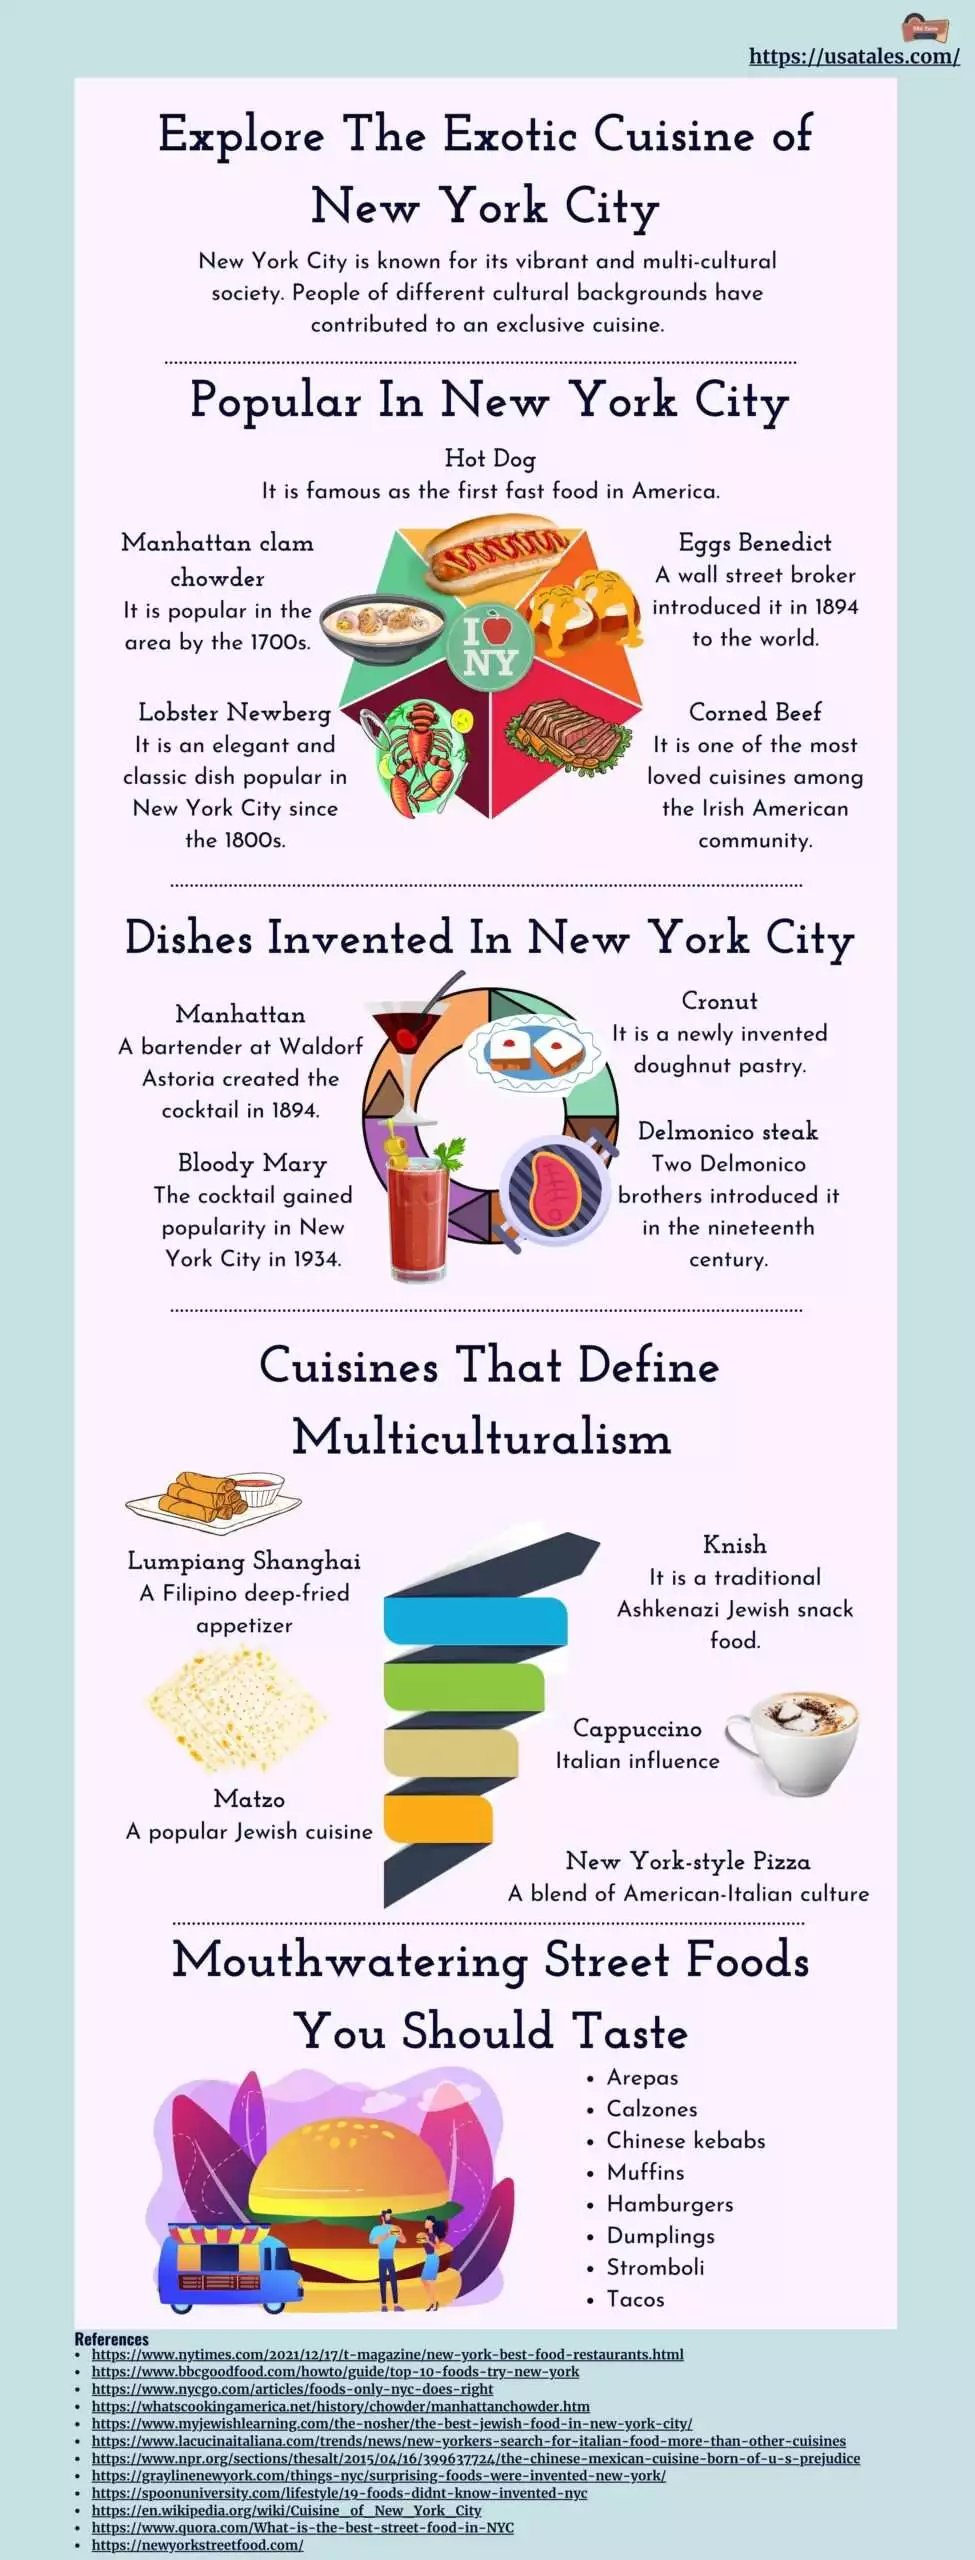 Explore The Exotic Cuisine of New York City